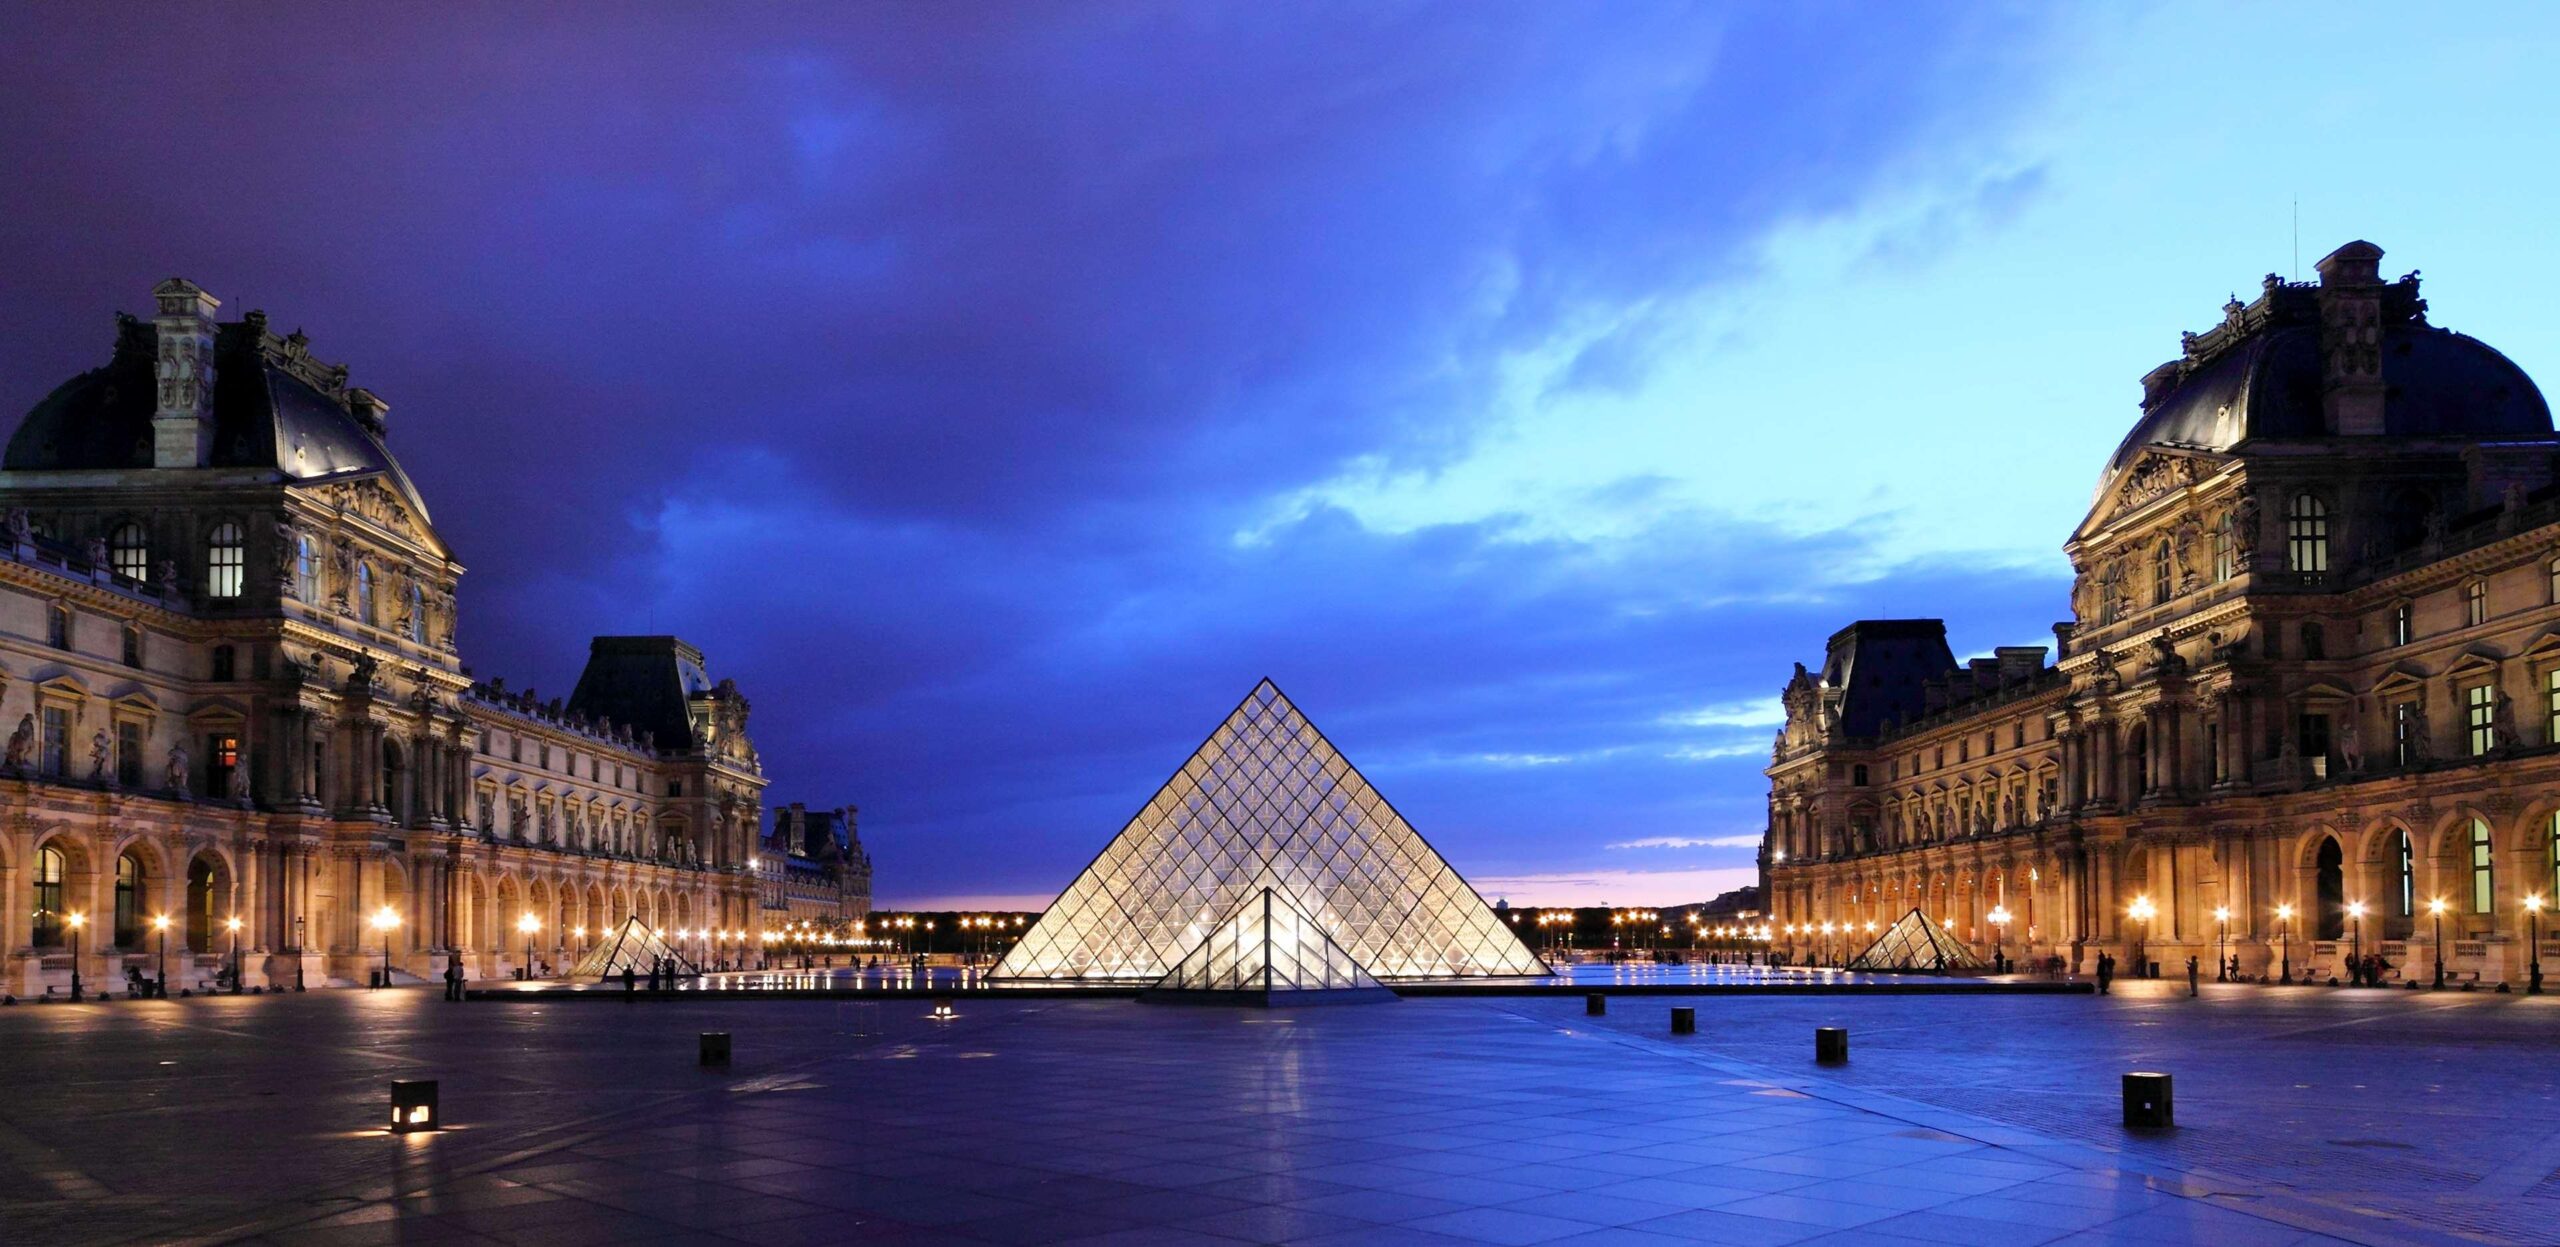 alt"=Louvre"